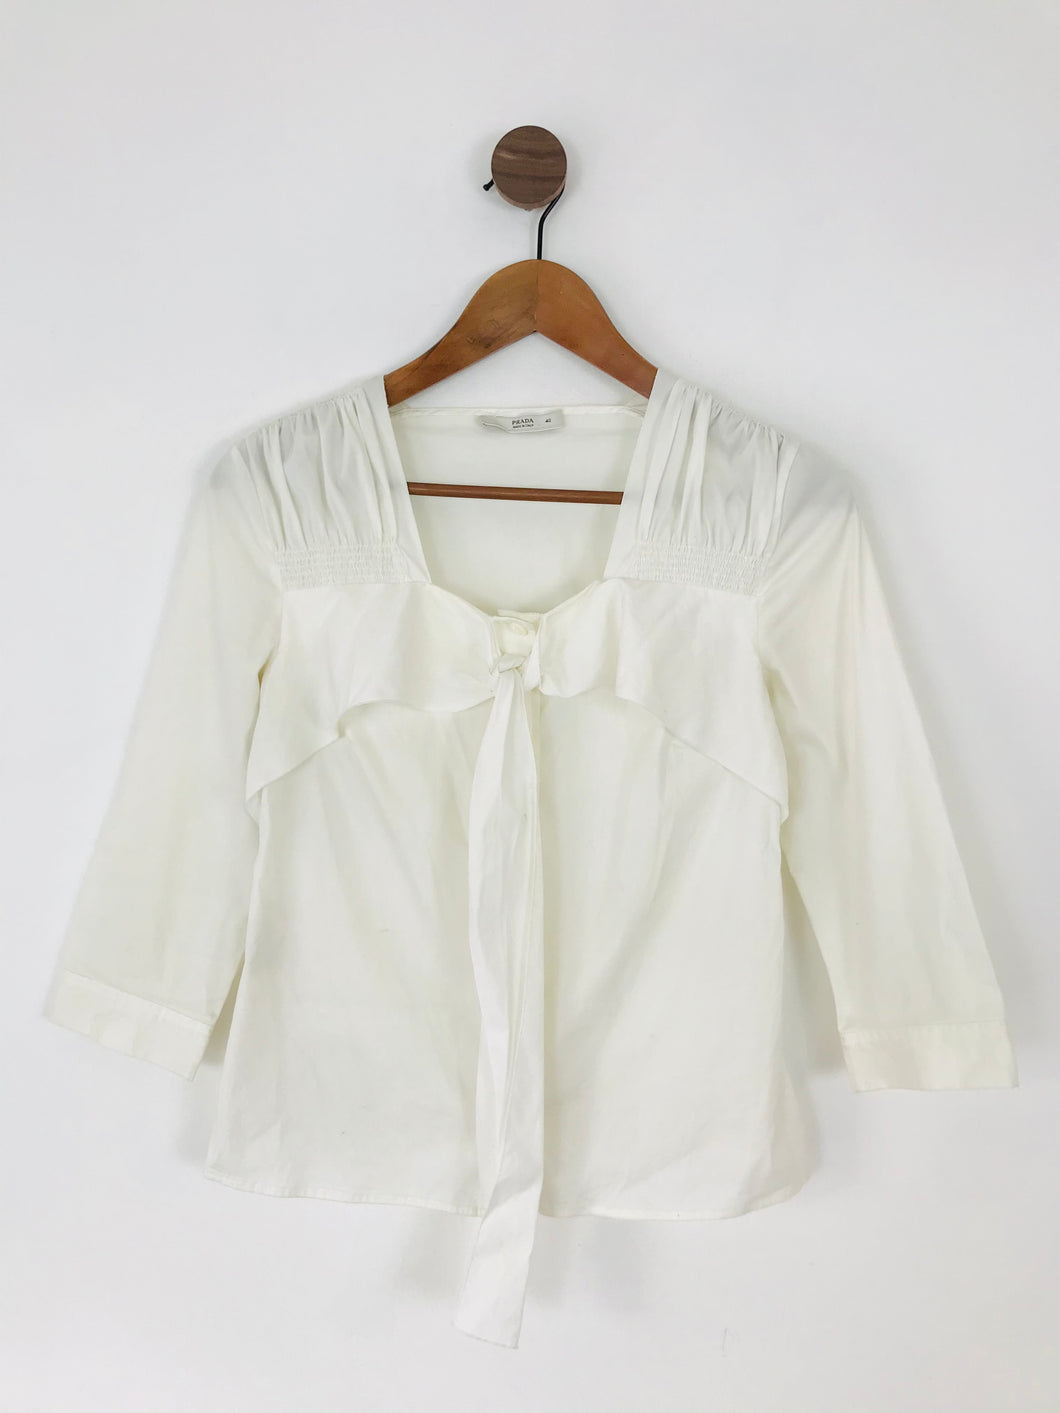 Prada Women’s Three Quarter Length Sleeve Blouse Shirt | 40 UK8 | White